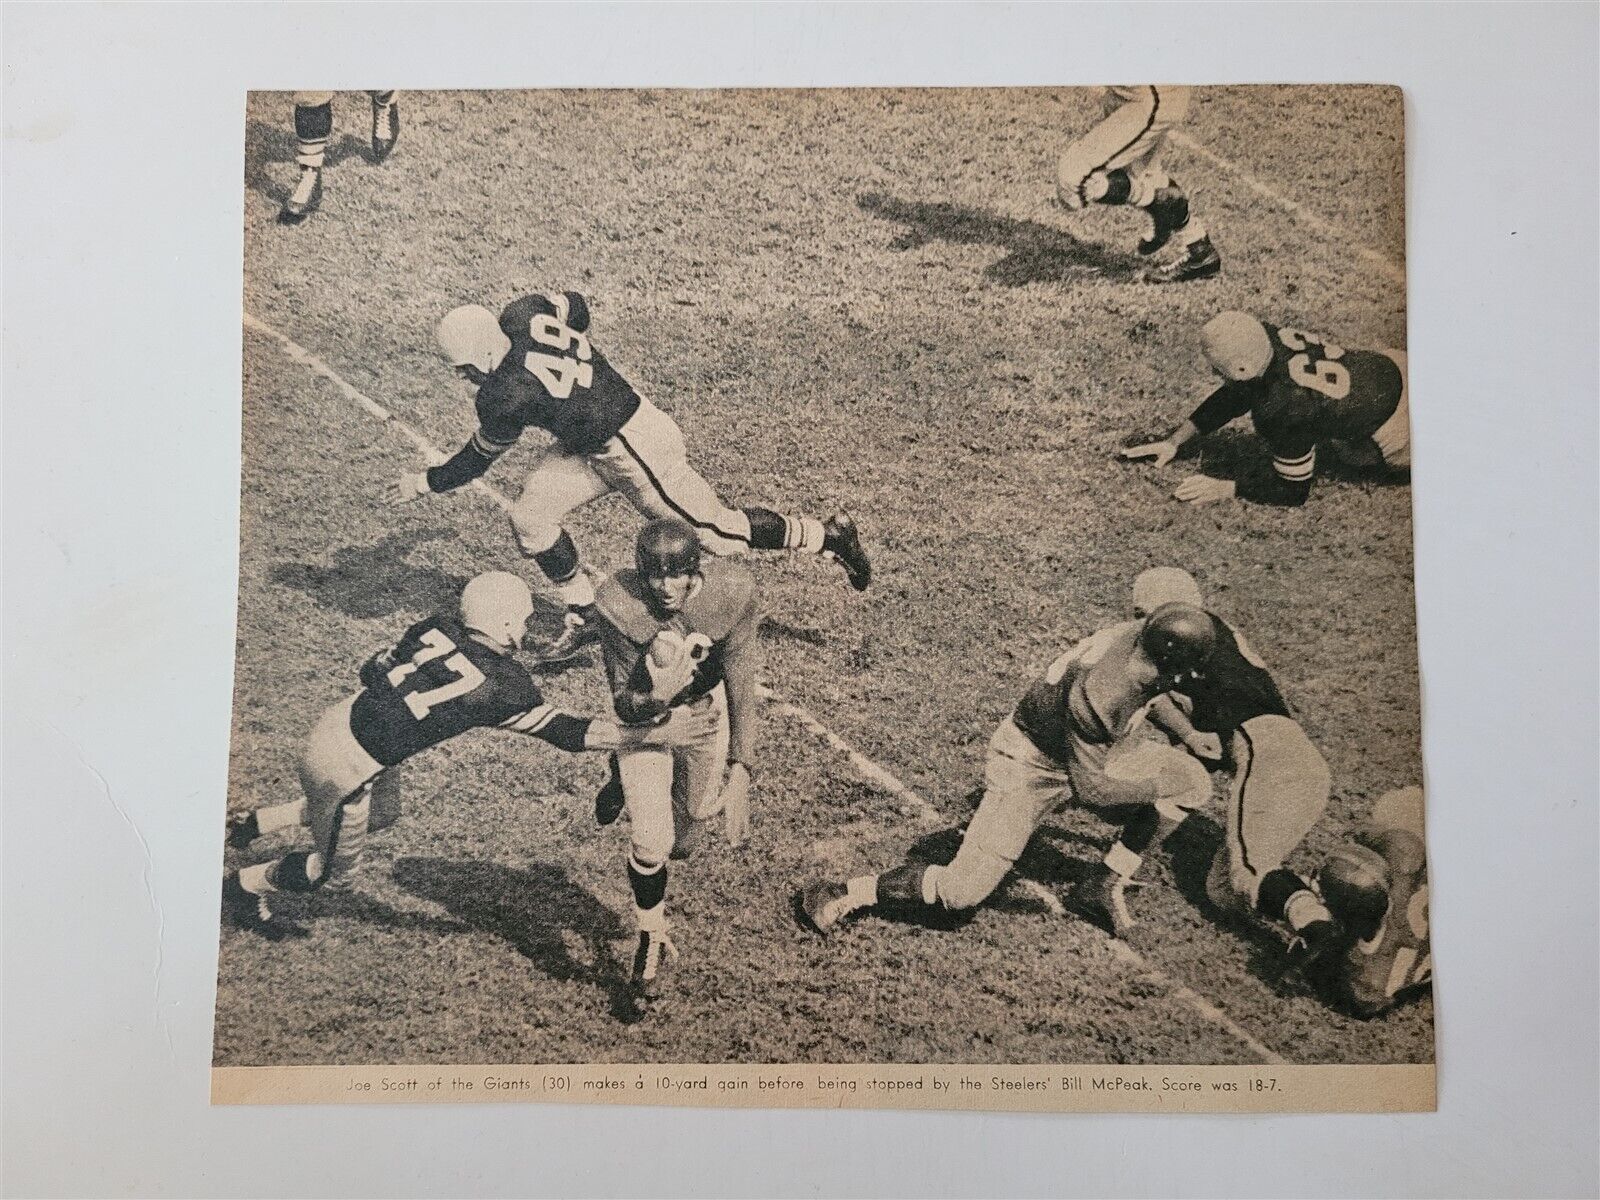 Joe Scott New York Giants Bill McPeak Steelers 1951 Football YB Player Panel